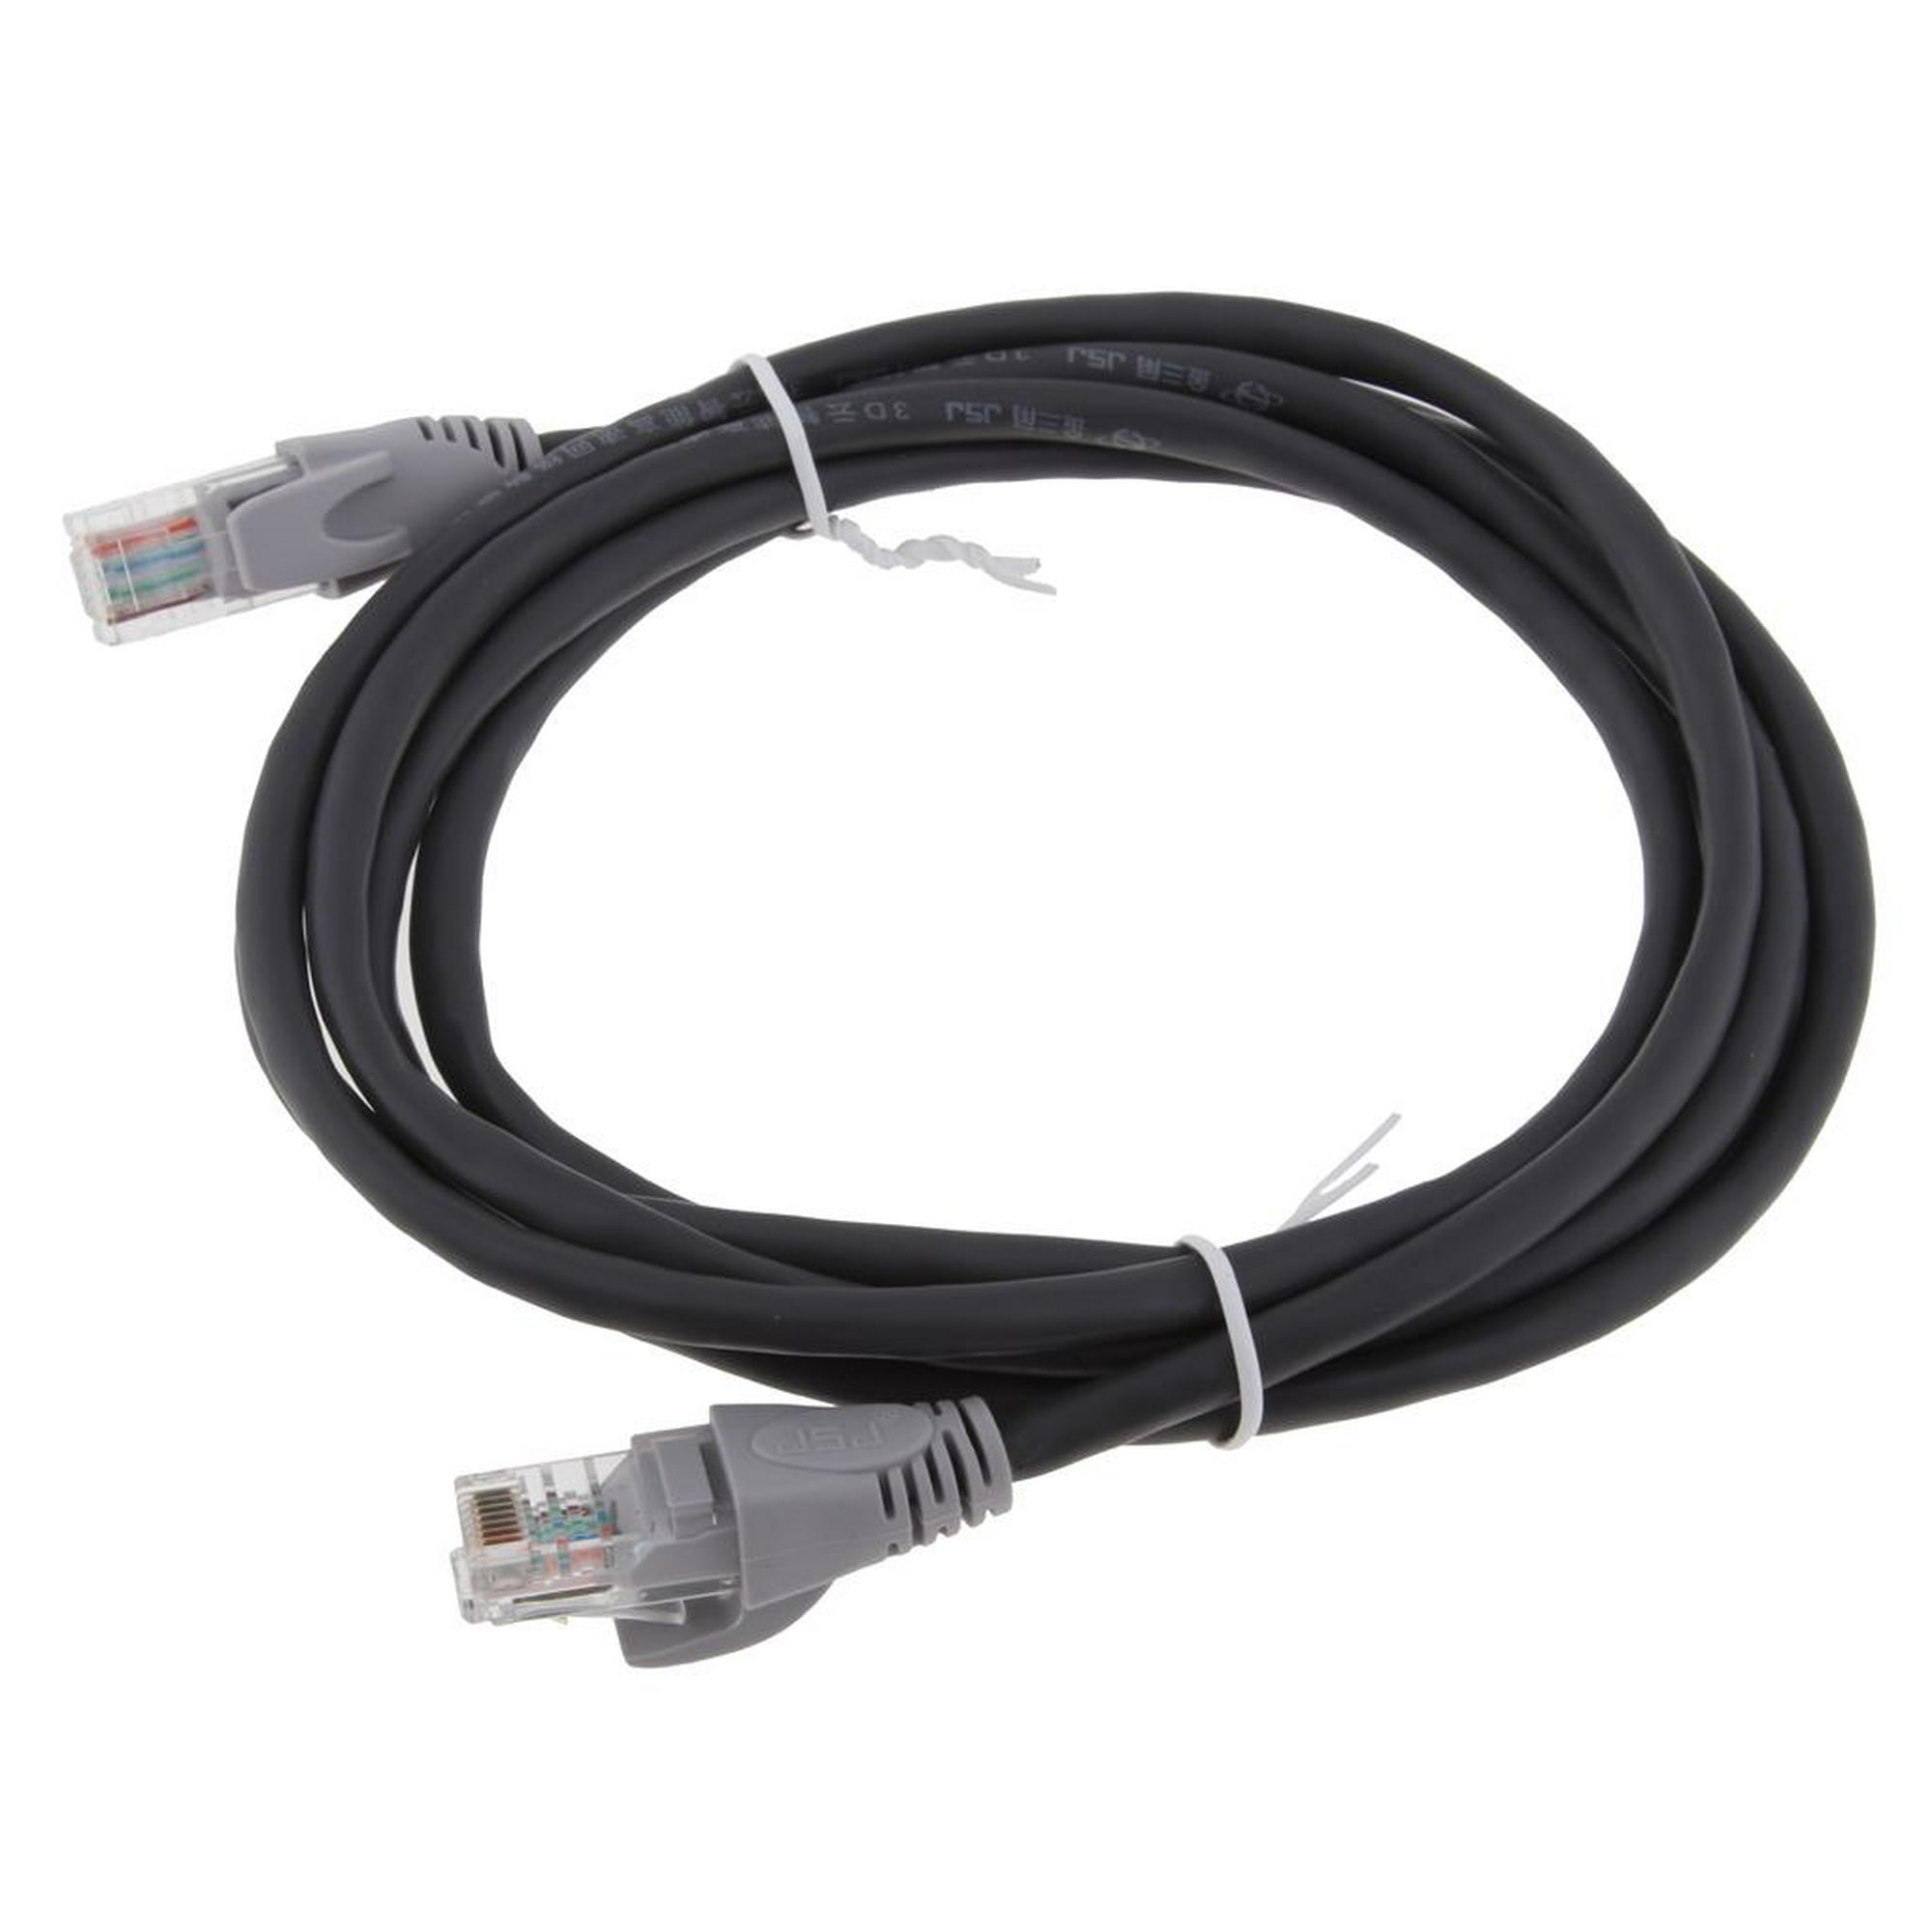 Cable Ethernet de red Cat5e de 1.5 metros a 15 metros de Sunnimix